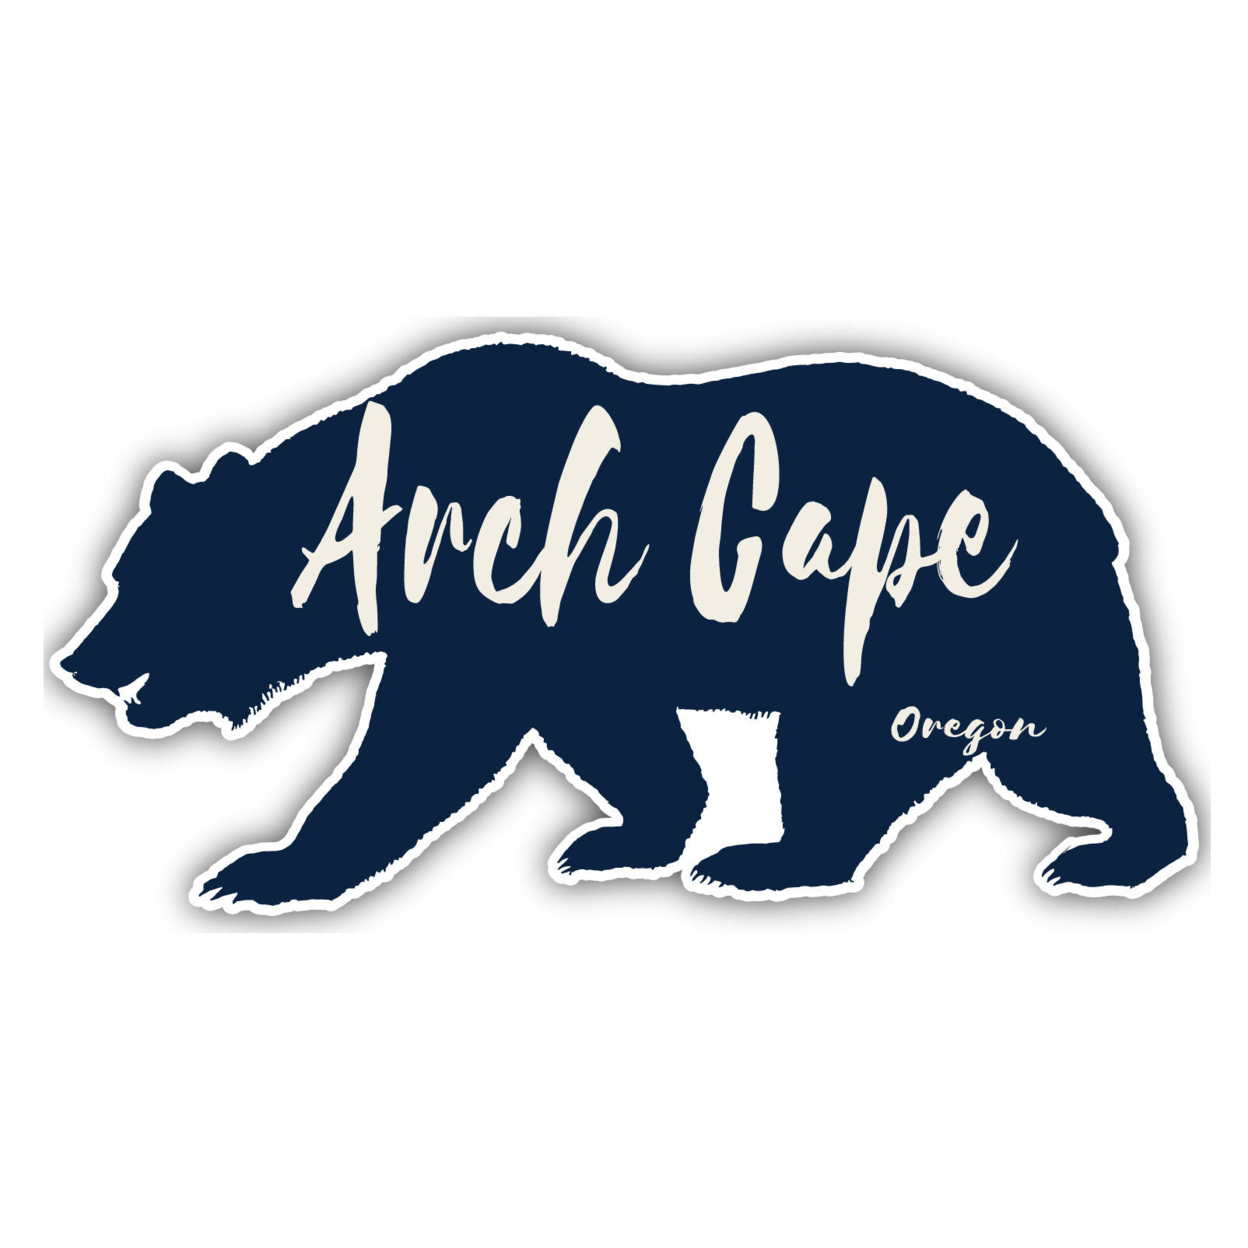 Arch Cape Oregon Souvenir Decorative Stickers (Choose Theme And Size) - Single Unit, 4-Inch, Bear